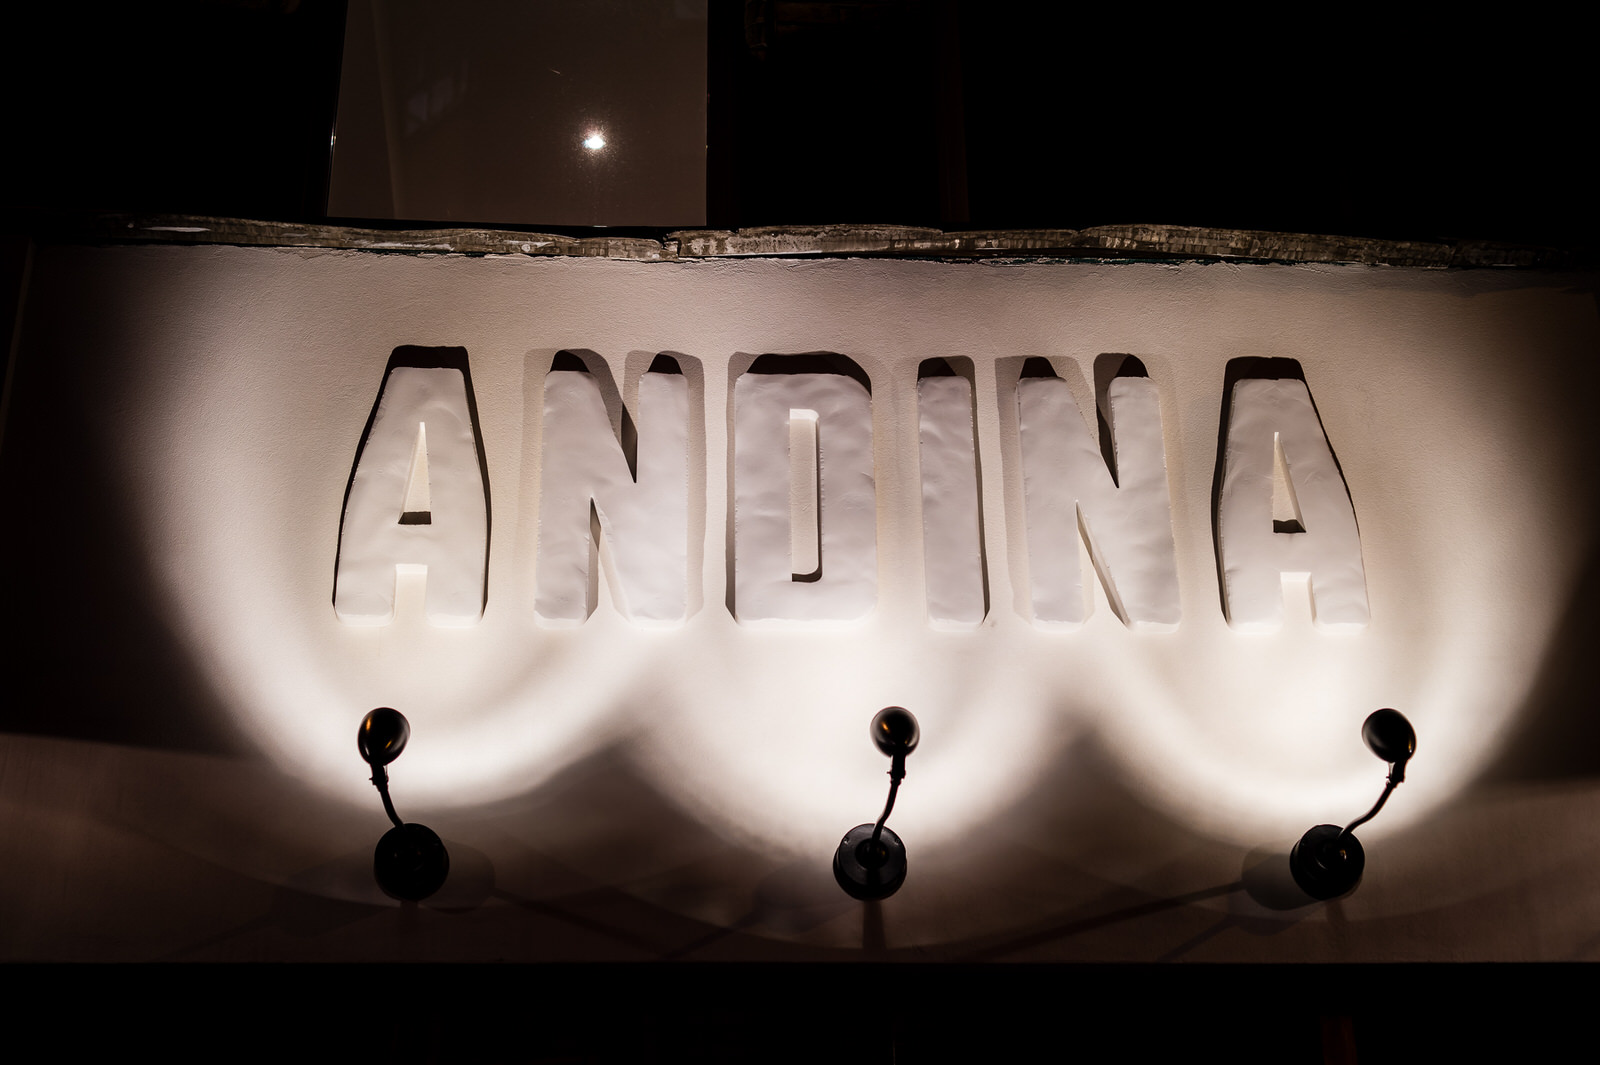 Andina Restaurant London - Paul Winch-Furness Photographer